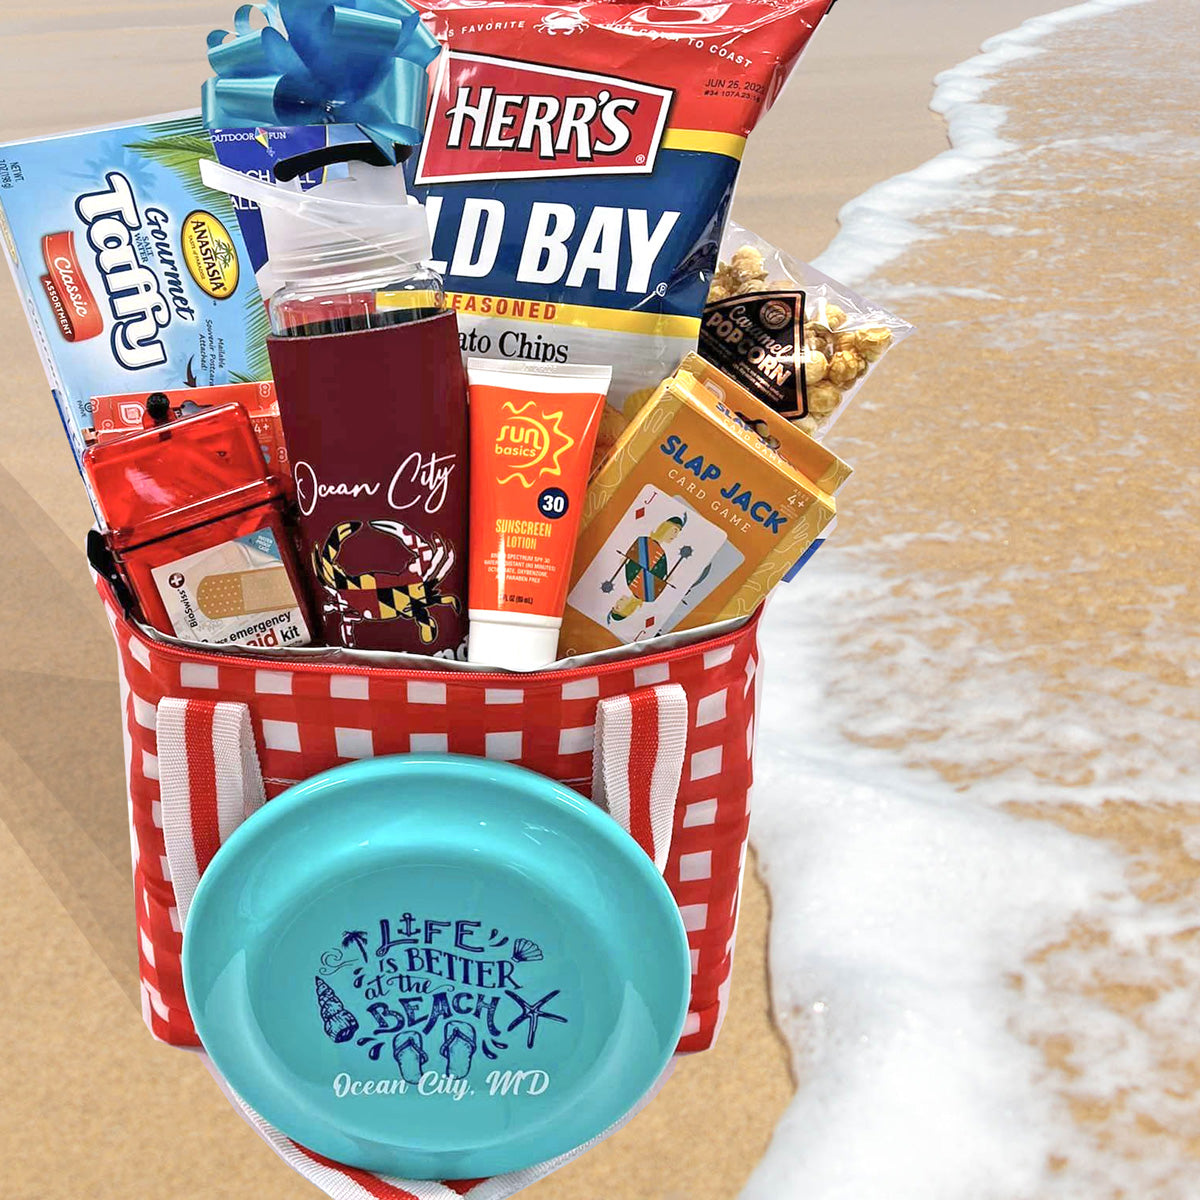 Ocean City Fun Days Gift Set Backpack Cooler Bag Celebrate Life at the Beach